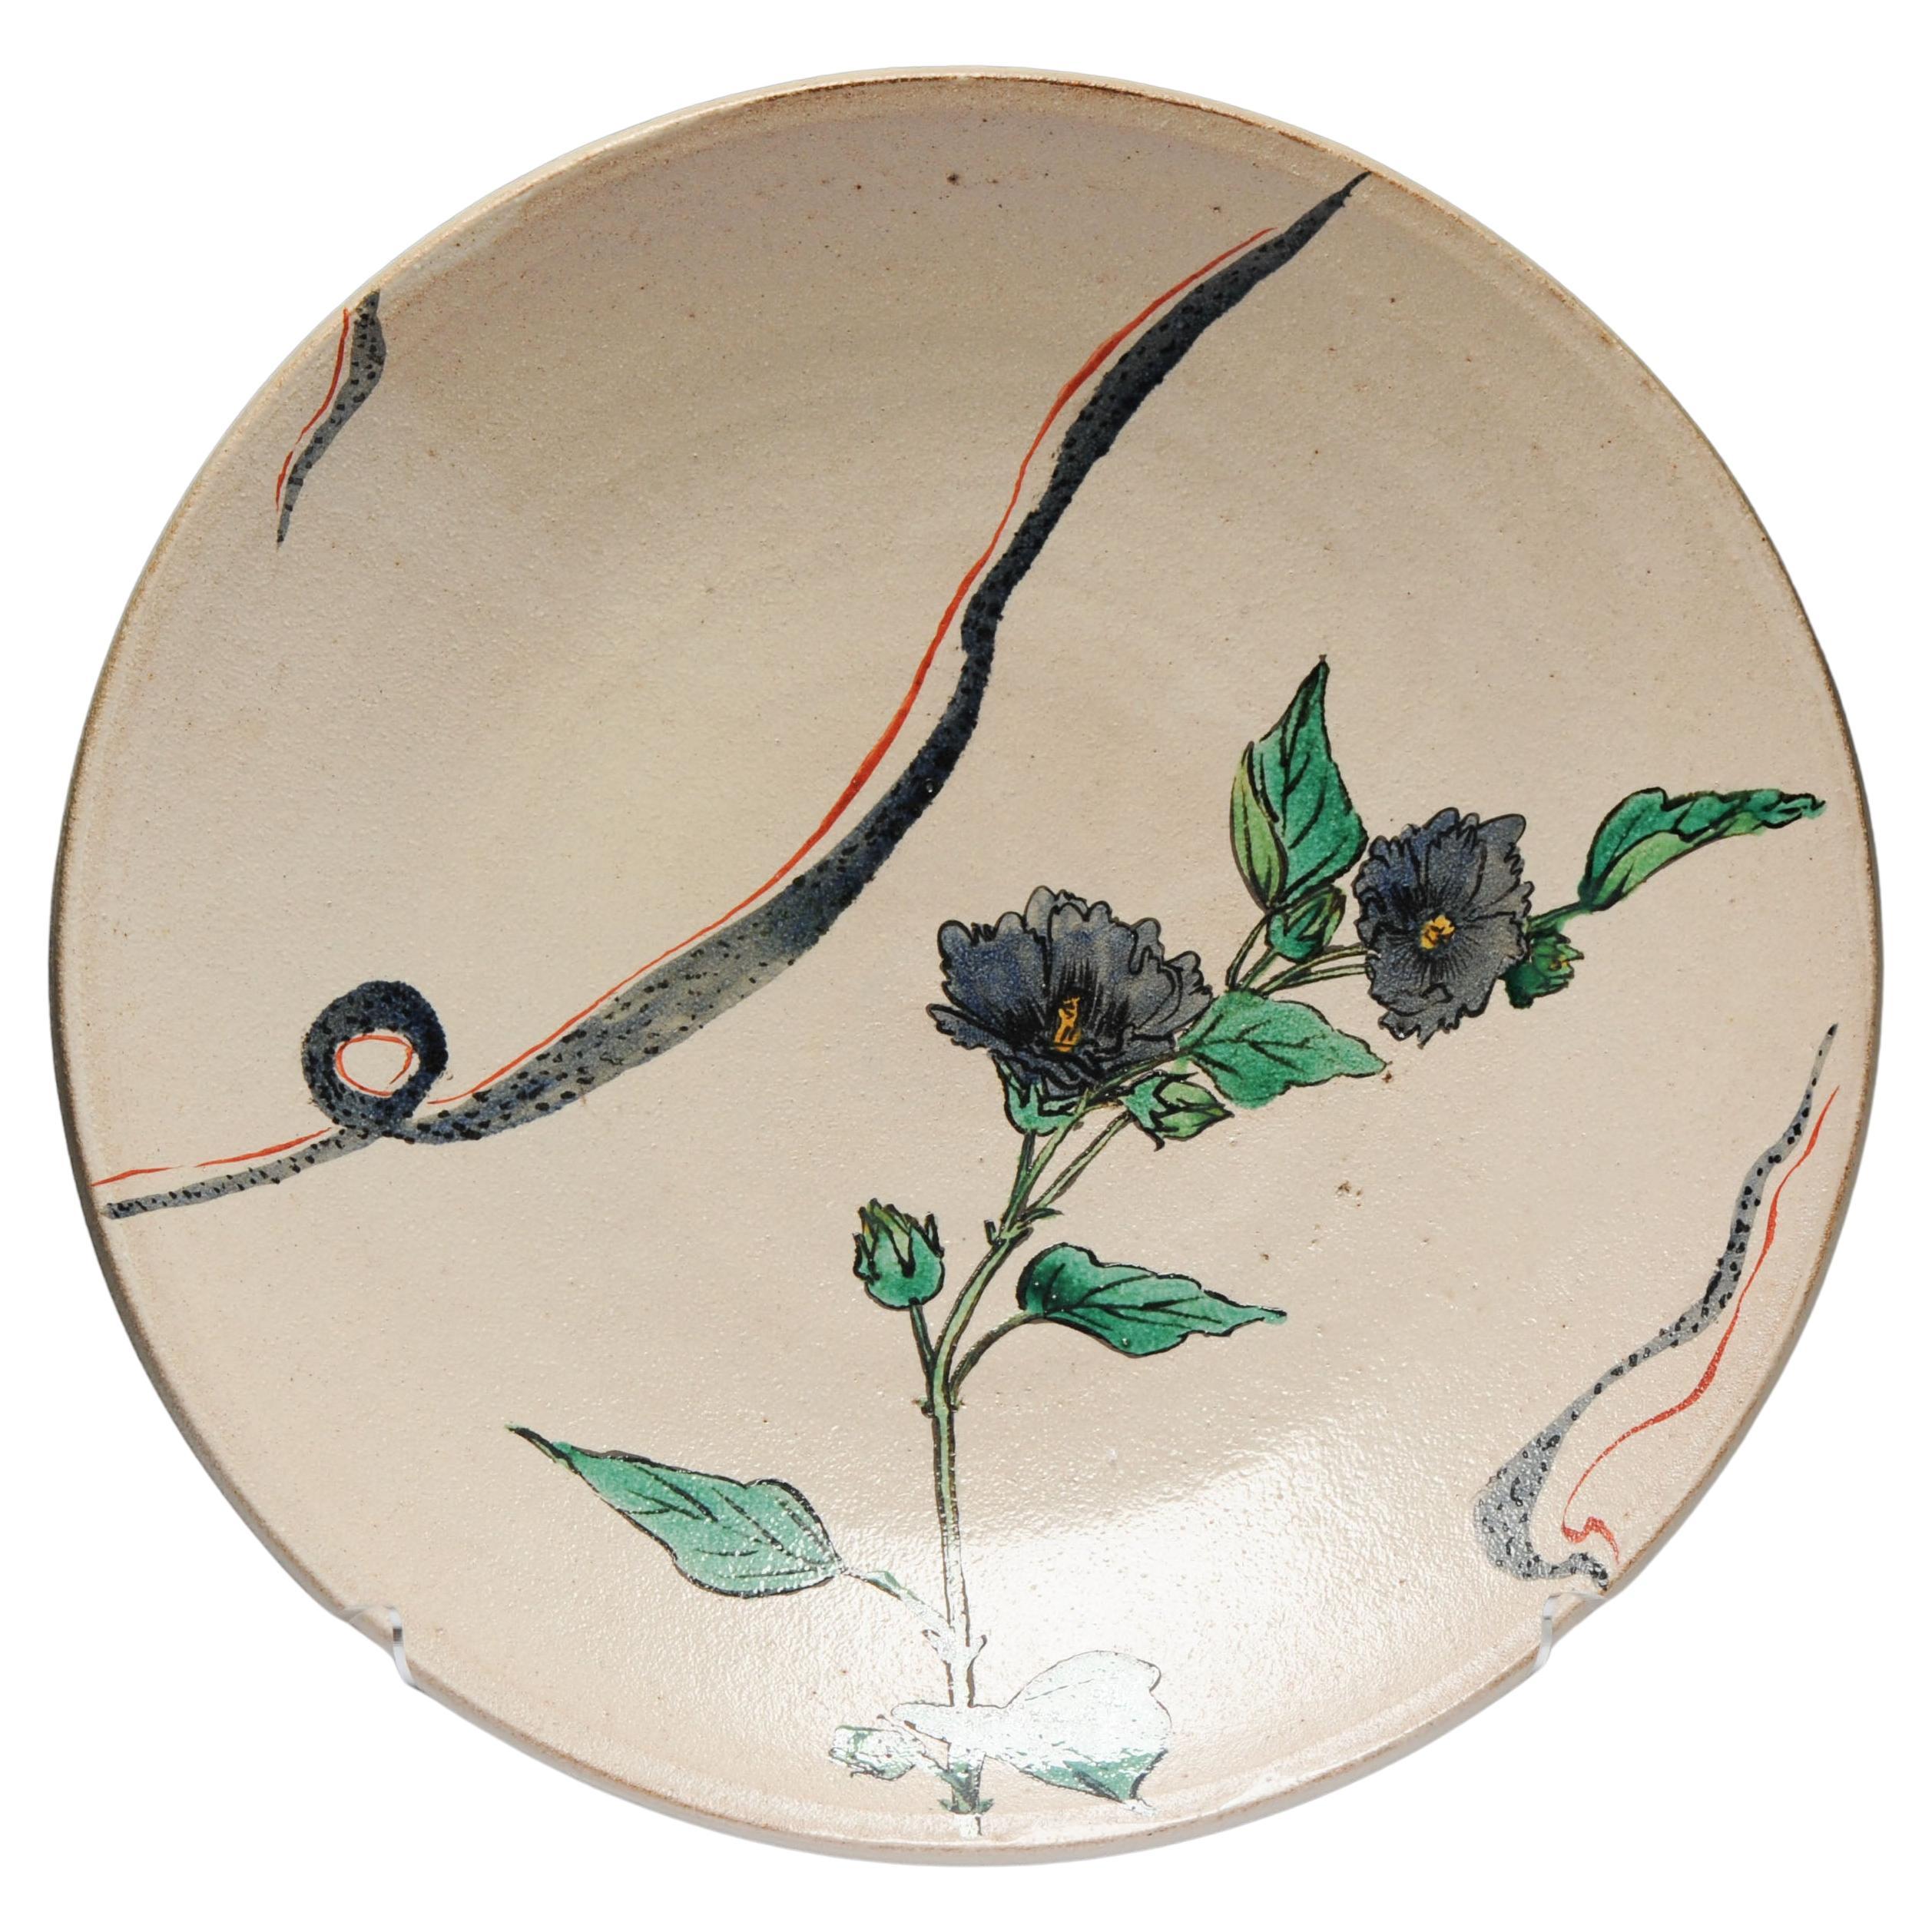 Gran Plato de Flores Kutani de Porcelana Japonesa del Siglo XX del Periodo Showa